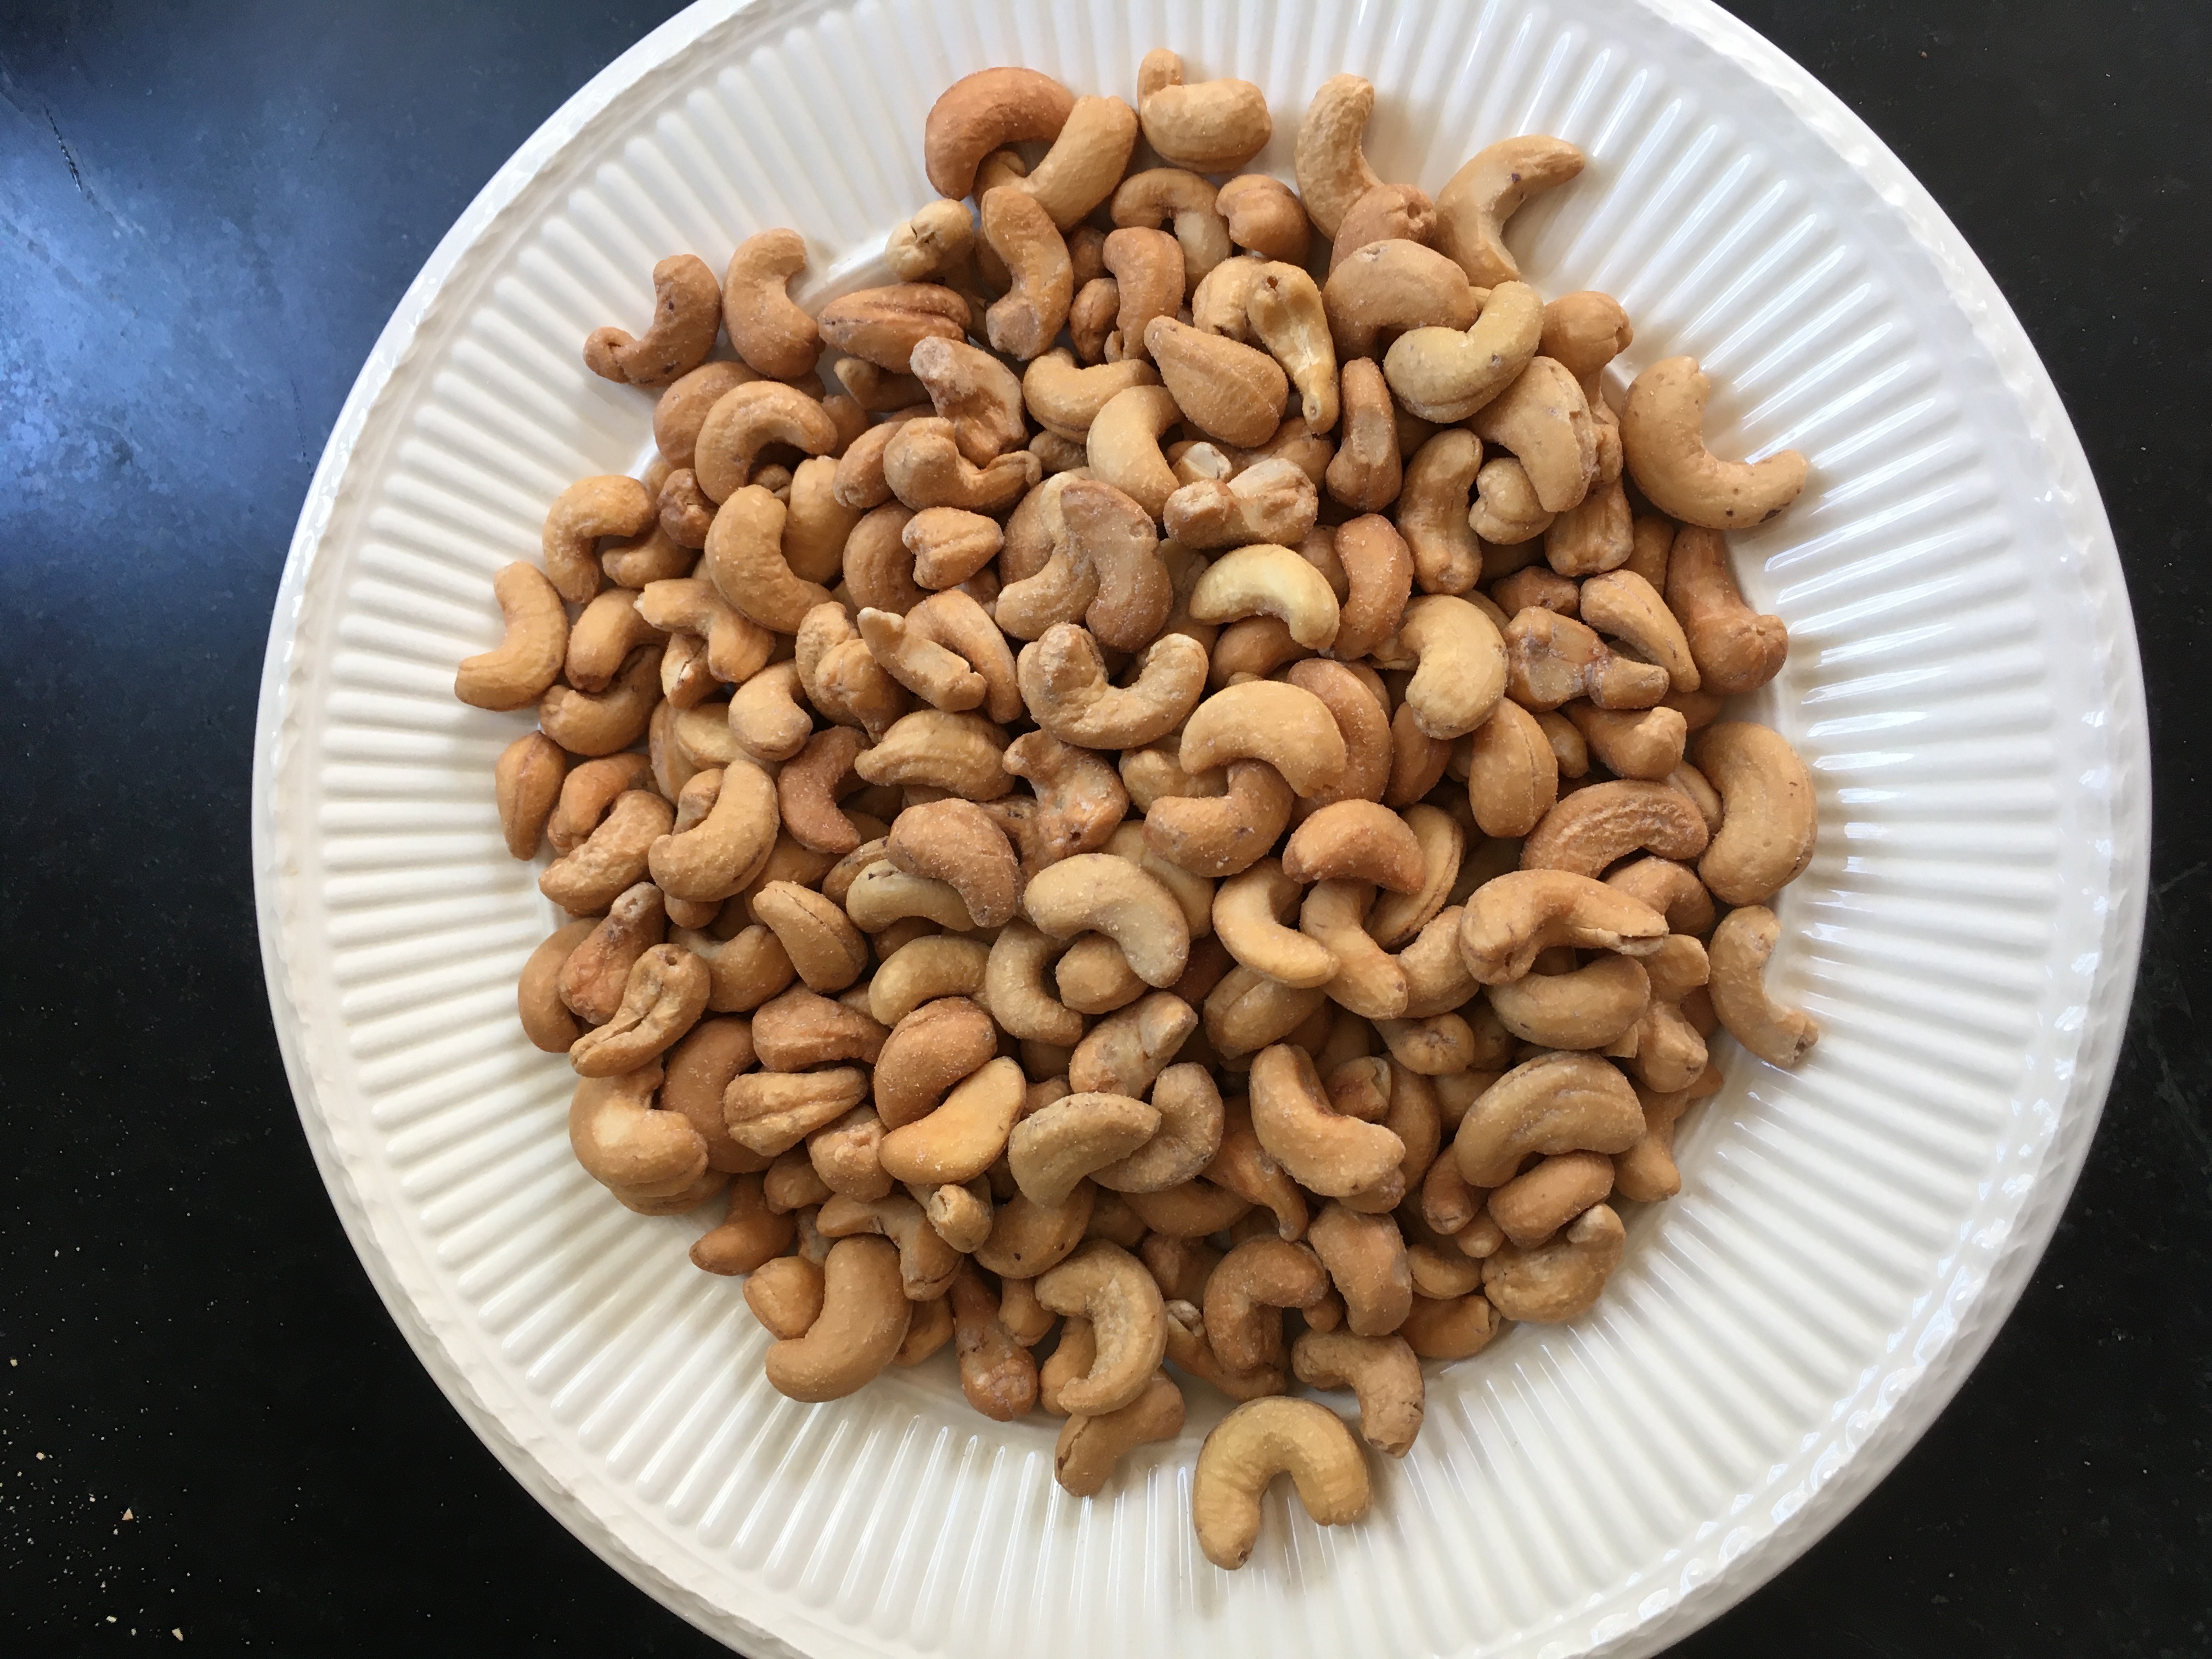 Trader Joe's whole cashews